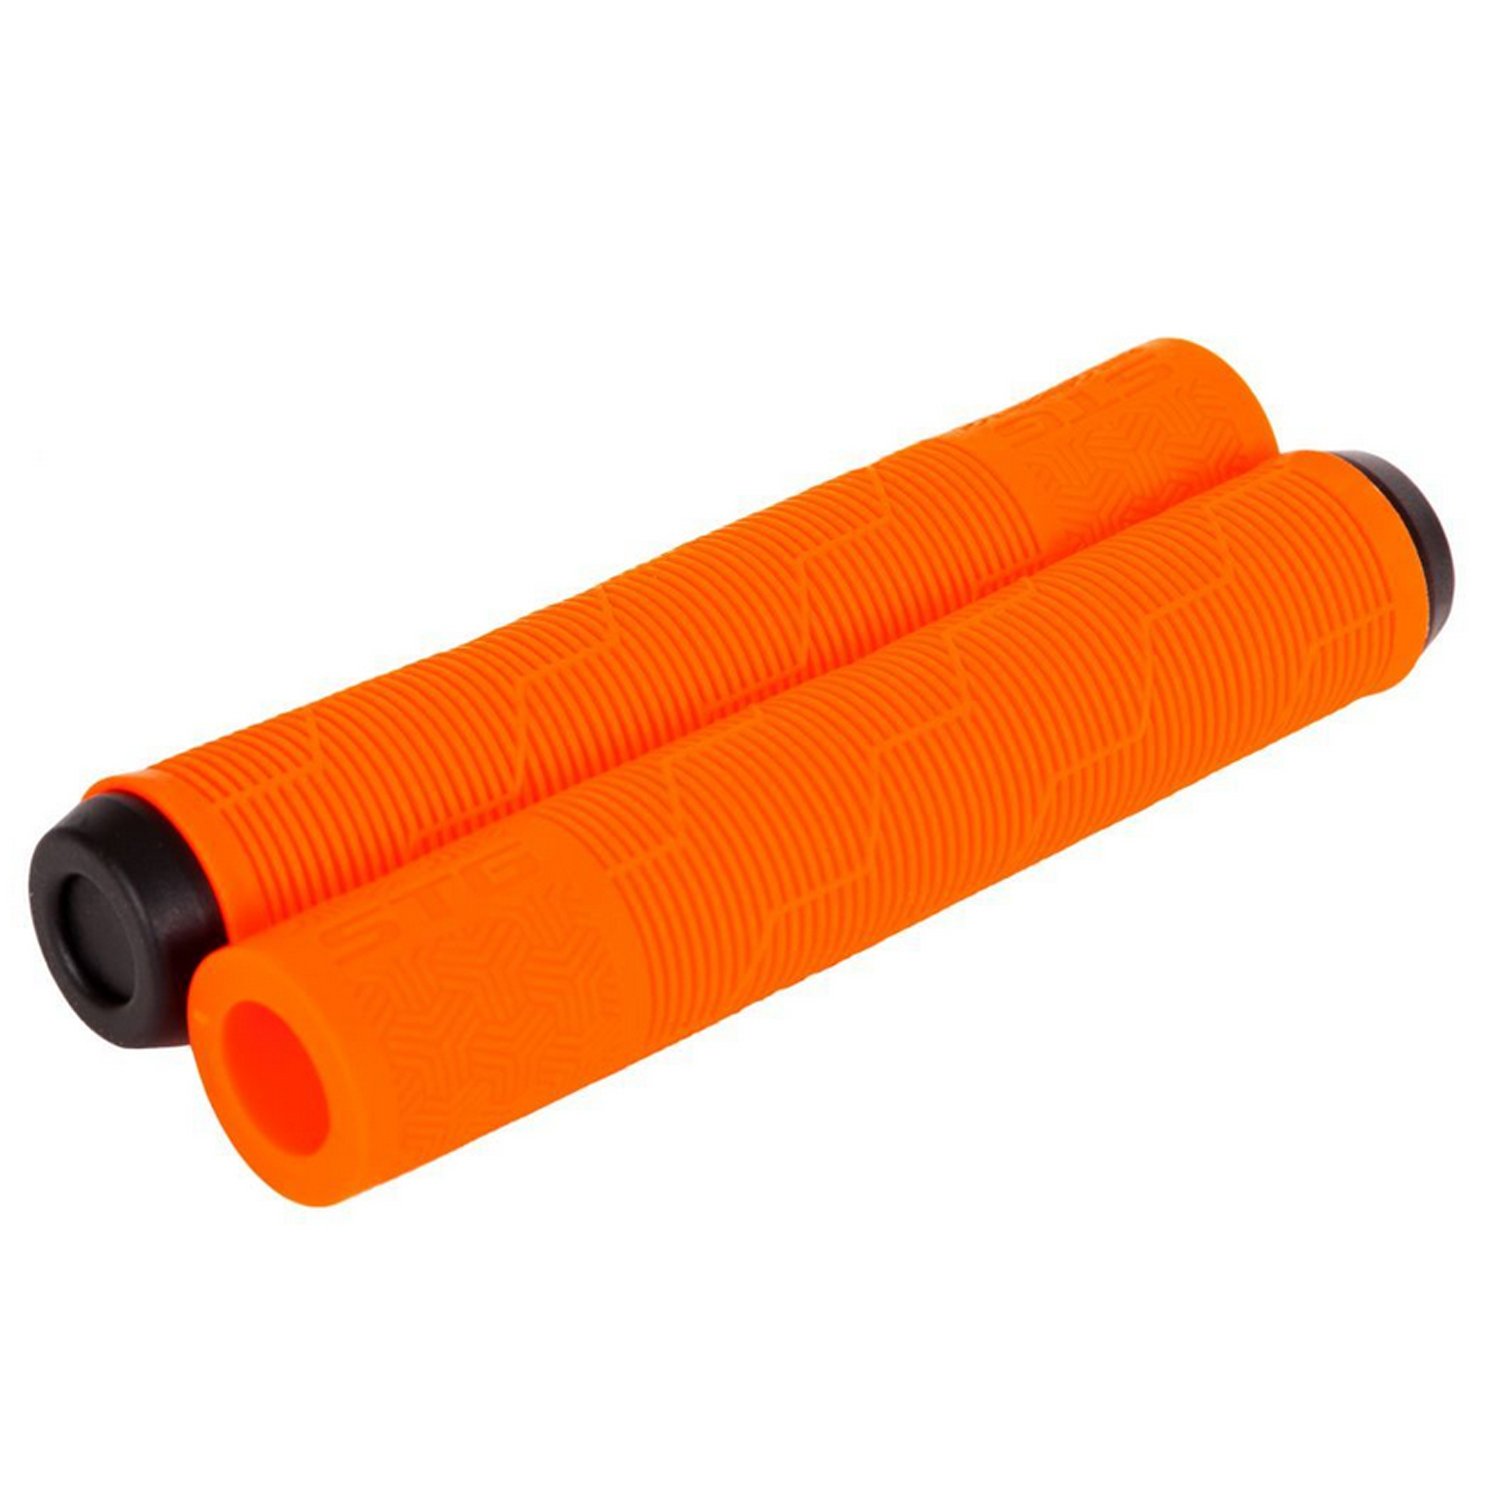 Грипсы велосипедные STG Gravity, 165 мм, оранжевый, Х108439 УТ-00346254 - фото 1